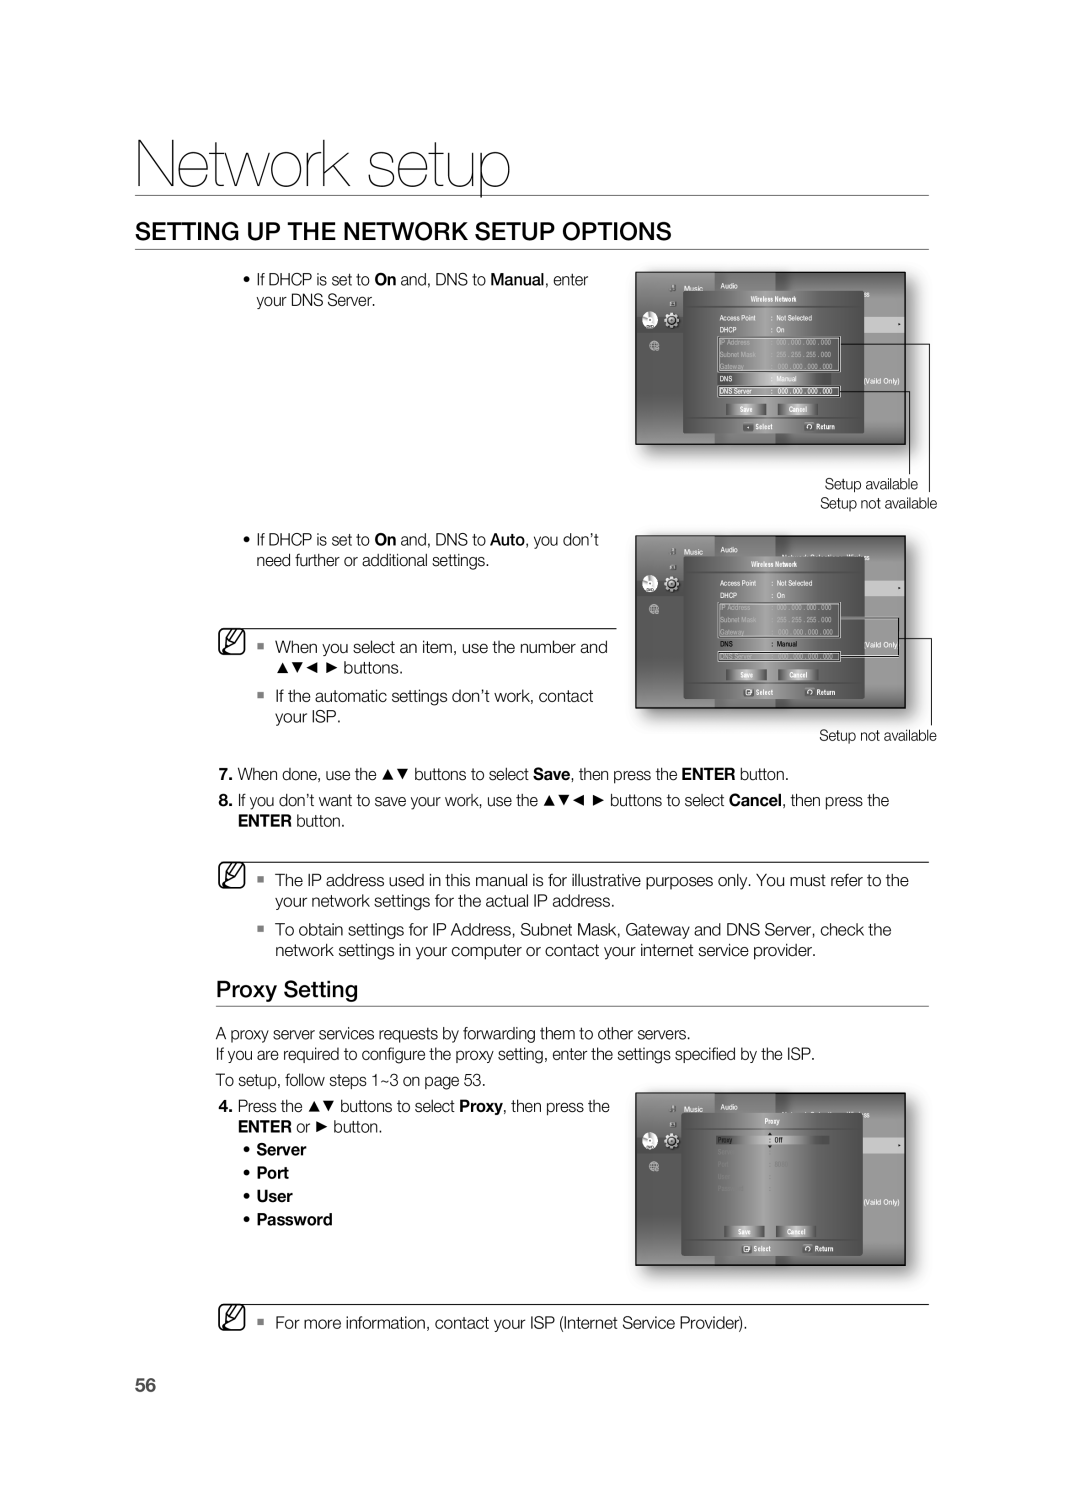 Samsung HT-BD3252 user manual Proxy Setting, Network setup, Setting Up The Network Setup Options, Server Port User Password 